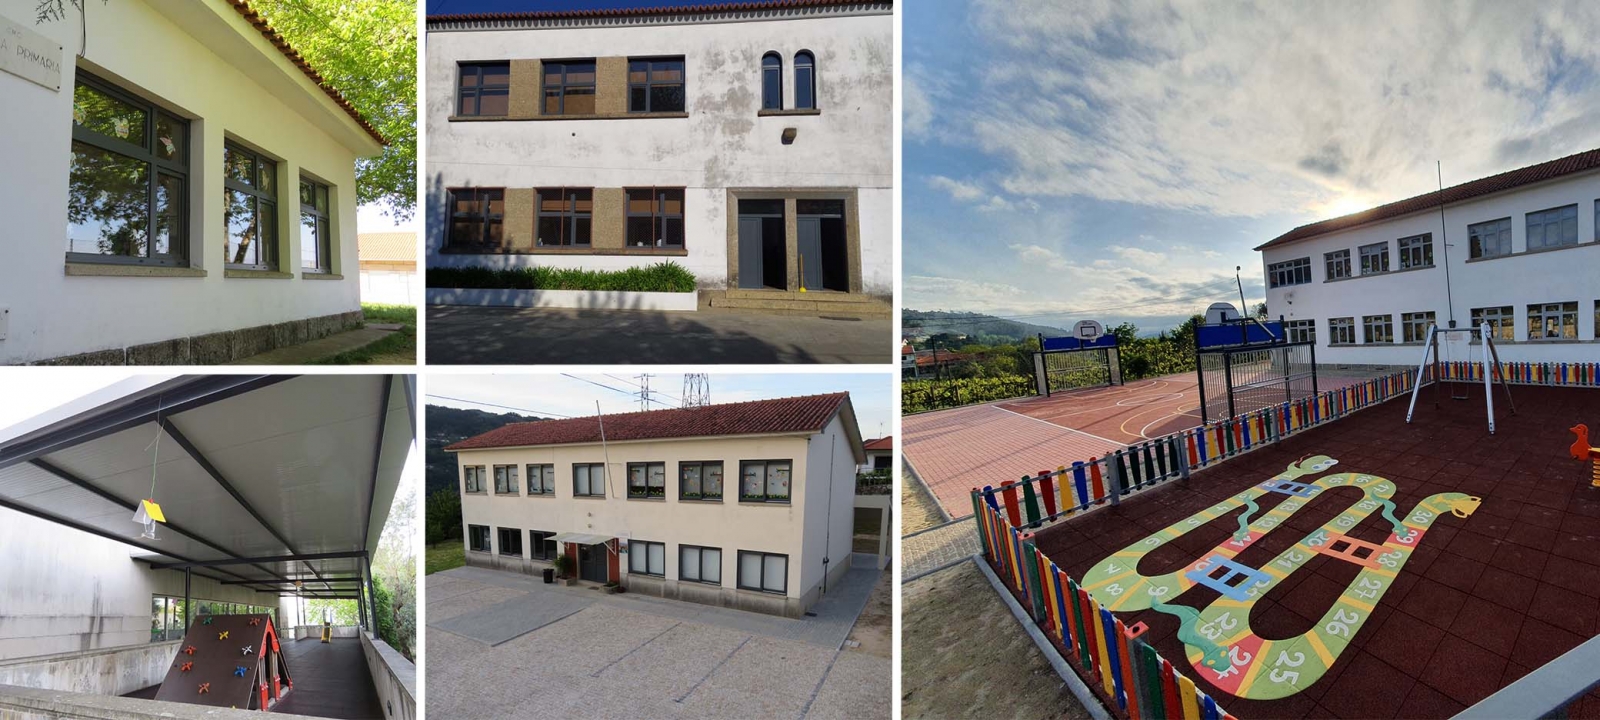 escola cinfães renovada 05 2021